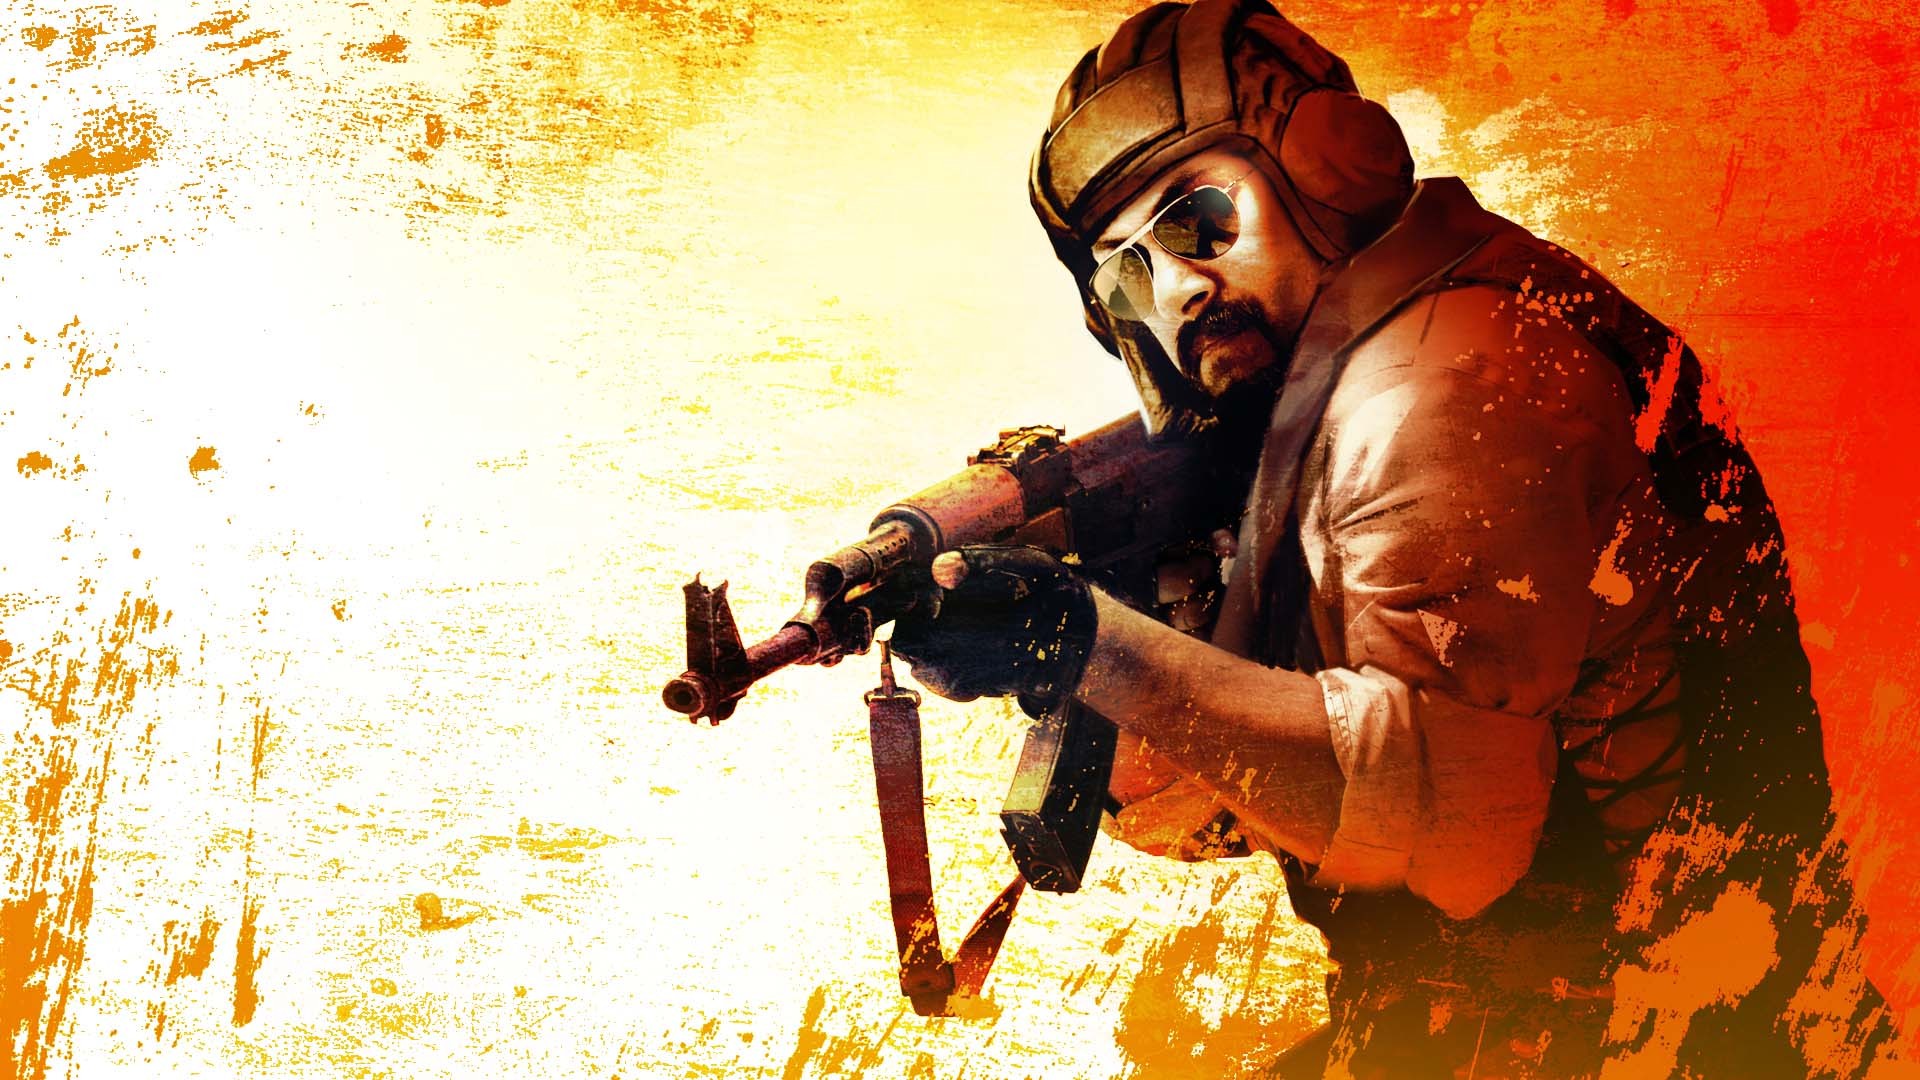 General 1920x1080 Counter-Strike: Global Offensive orange background AK-47 video games weapon machine gun video game men PC gaming video game art